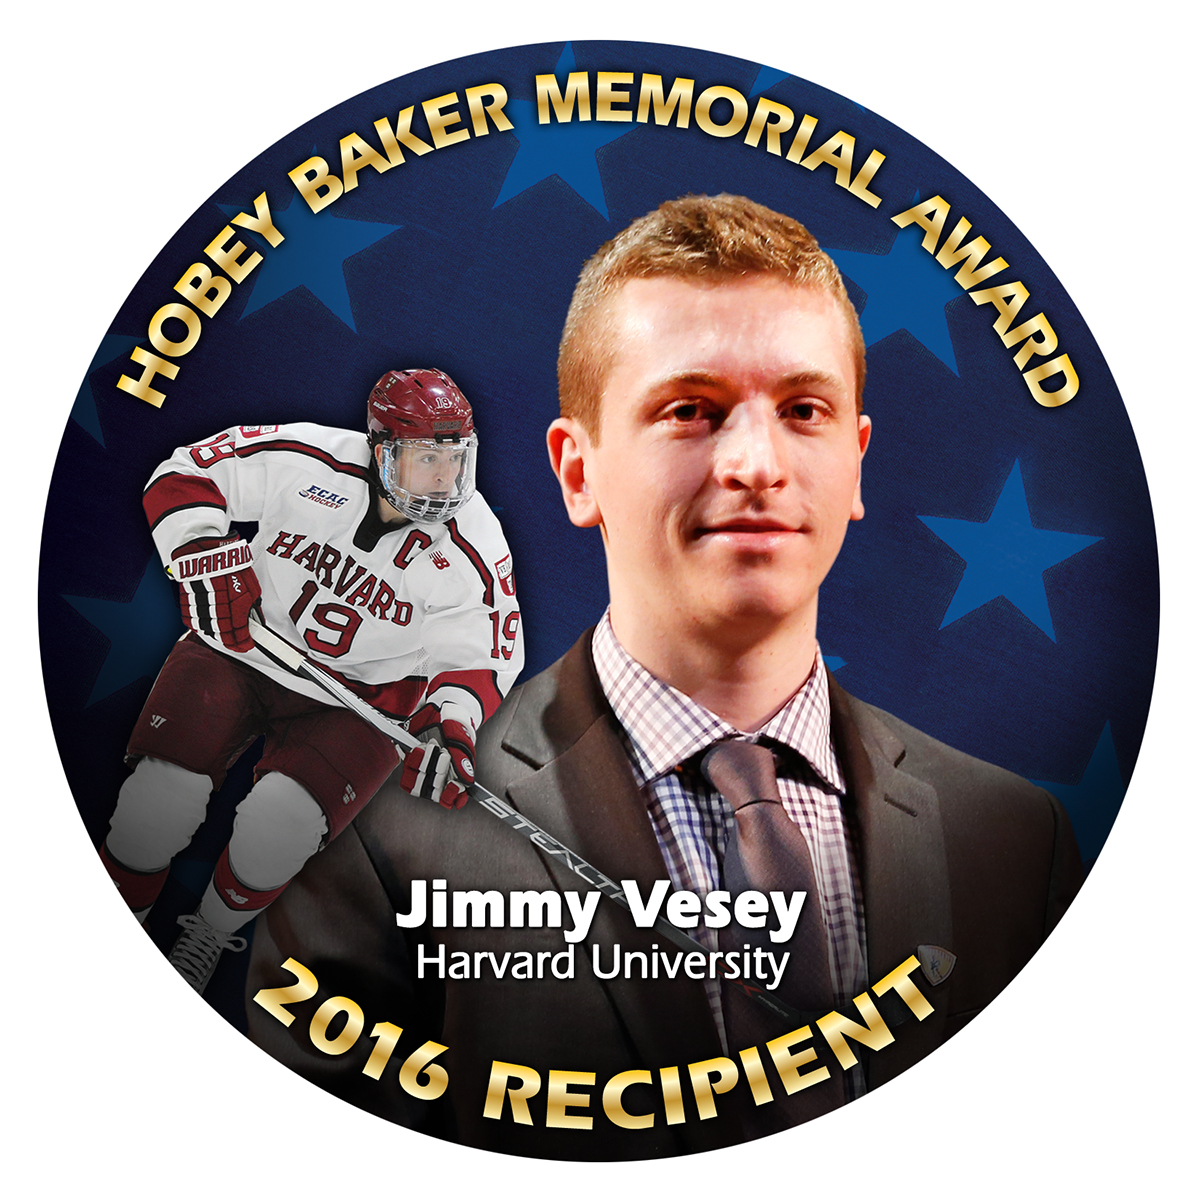 JIMMY VESEY WINS 2016 HOBEY BAKER AWARD – Hobey Baker Memorial Award